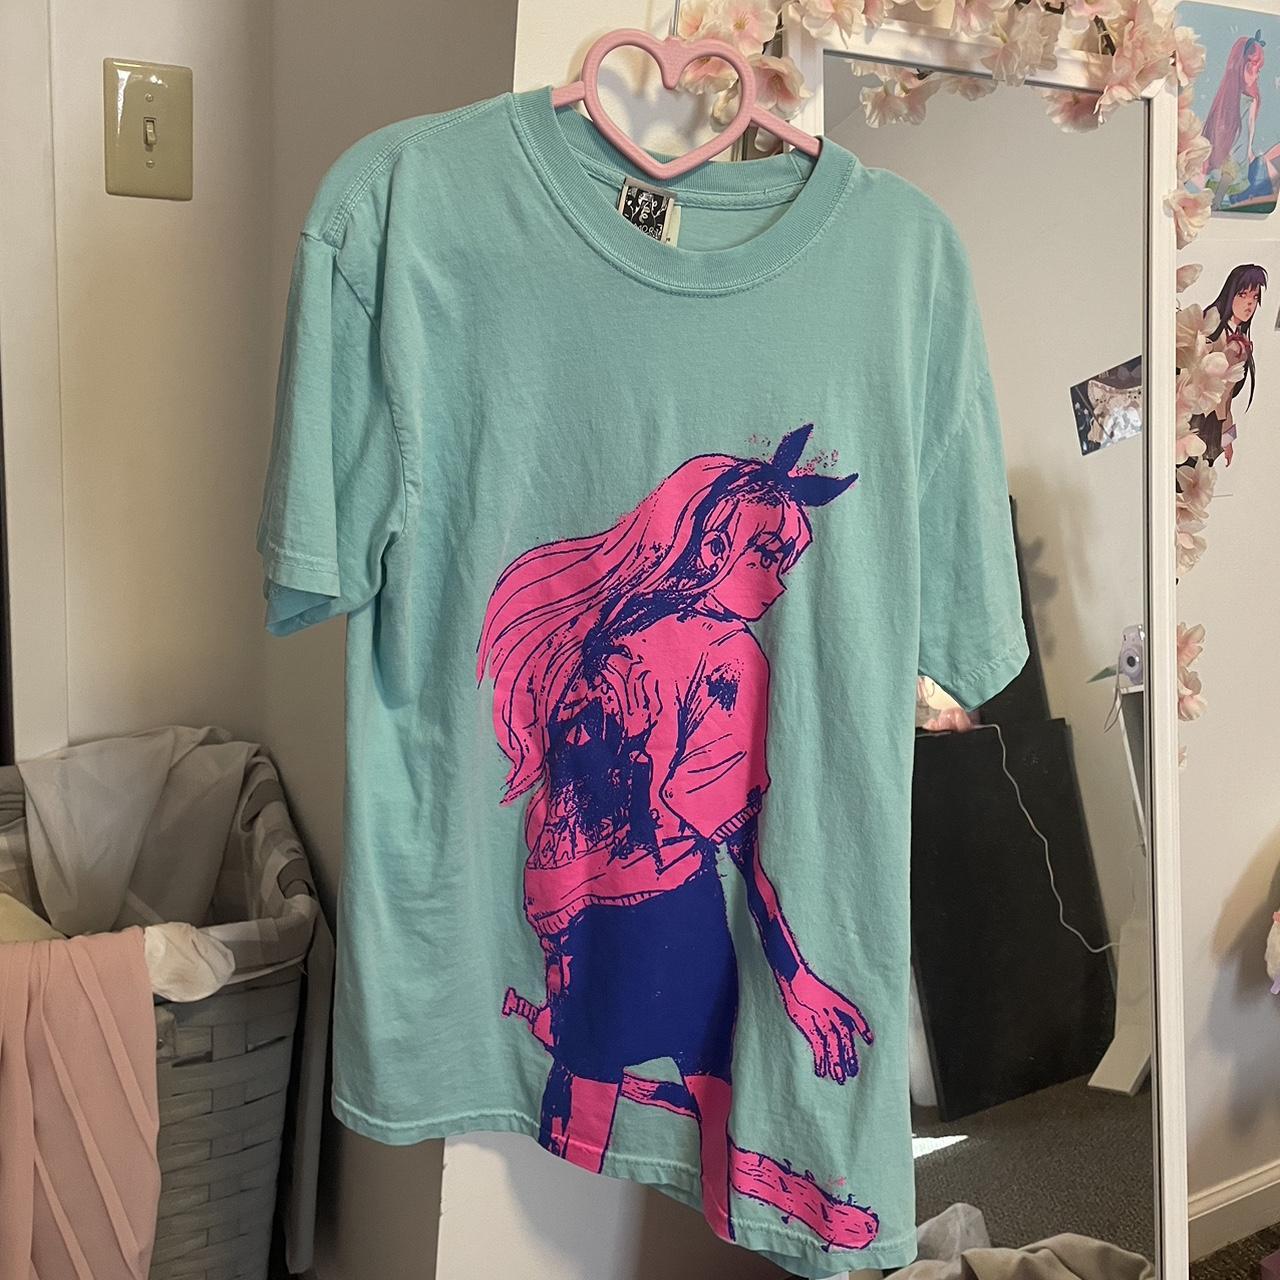 OMOCAT Women's Pink and Blue T-shirt